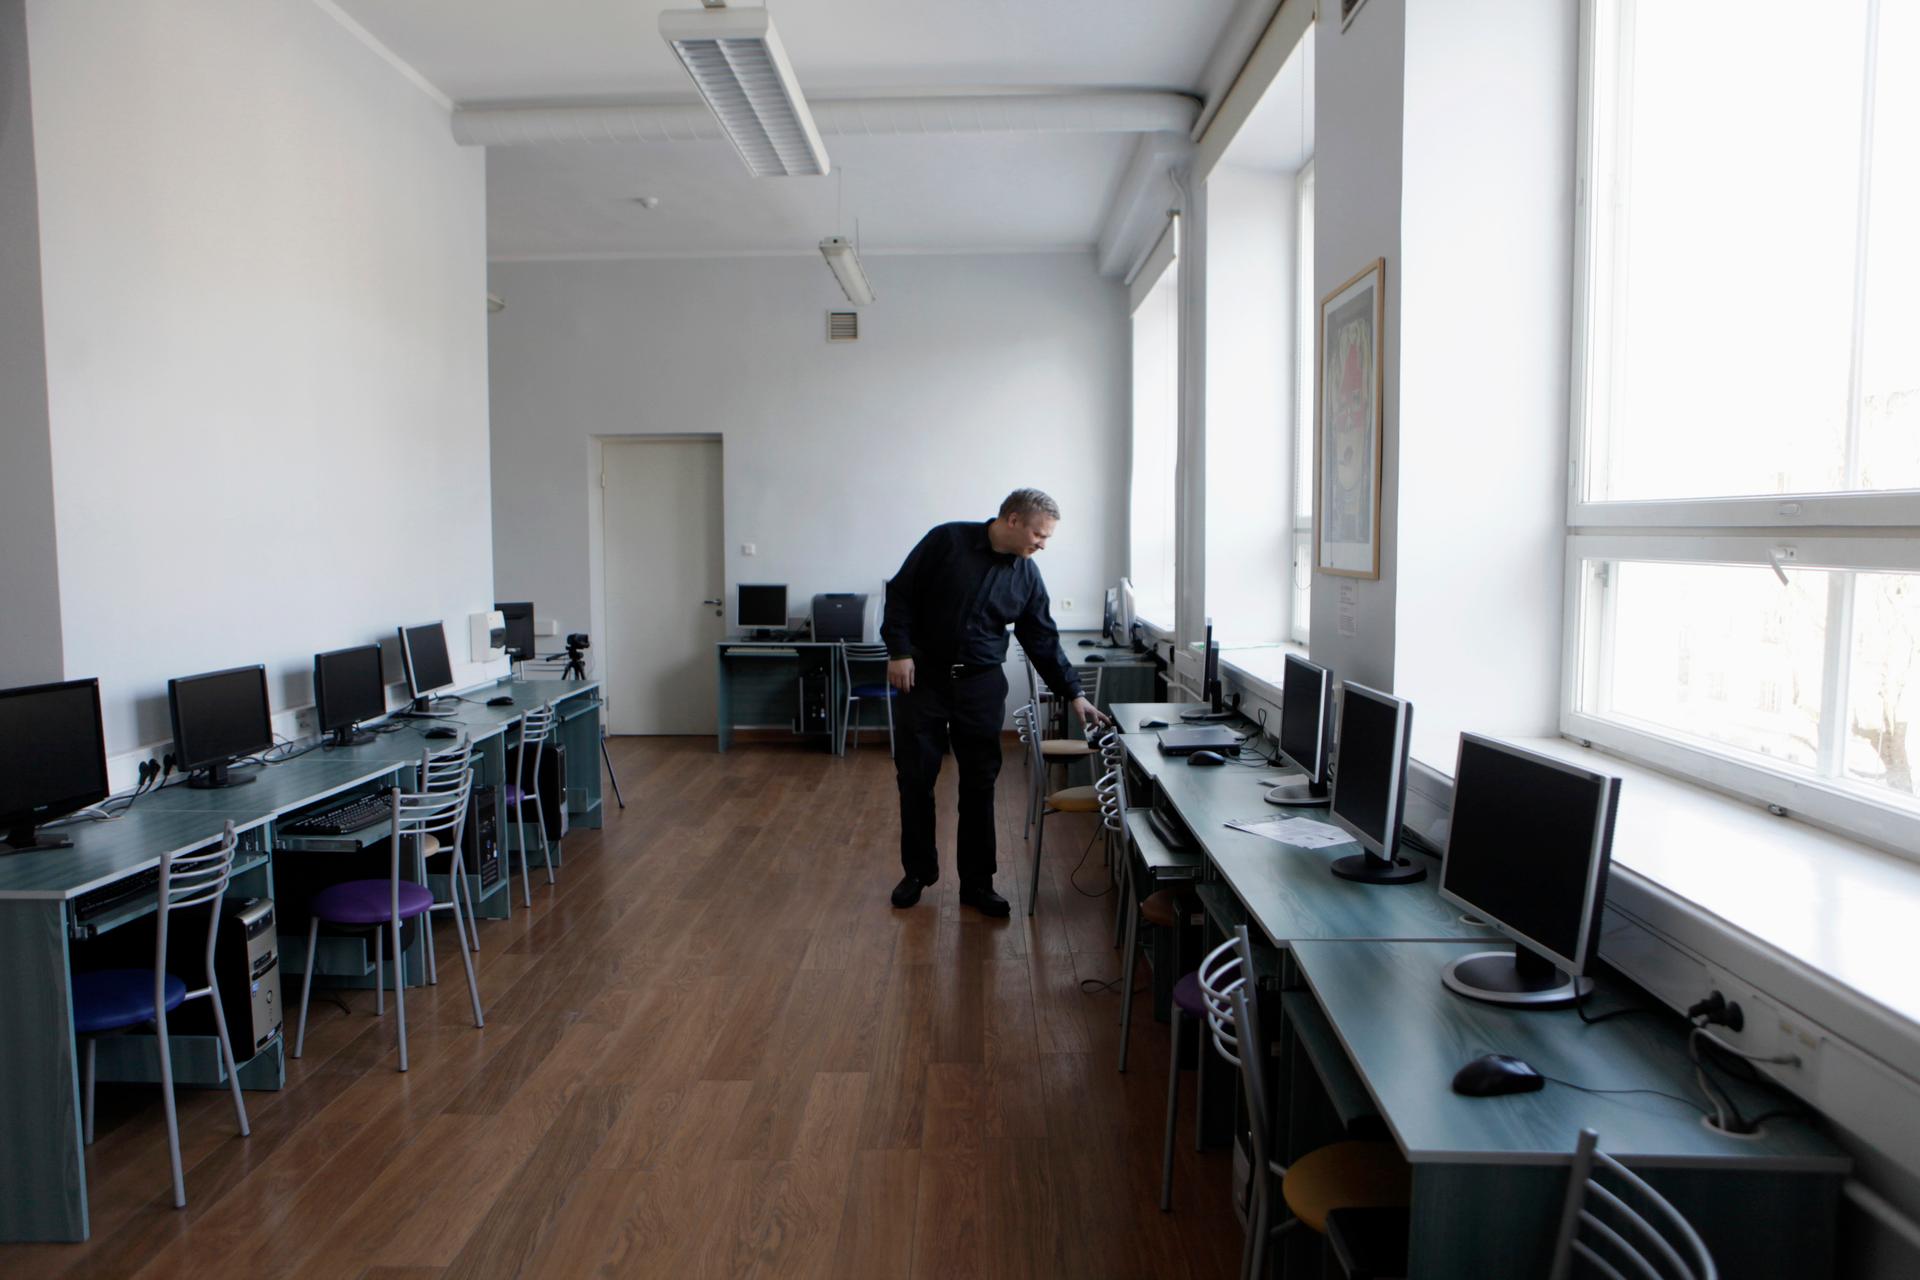 Informatics teacher Jevgeni Mihhailov inspects computers in an empty classroom in a school in Tallinn, Estonia, on March 7, 2012.